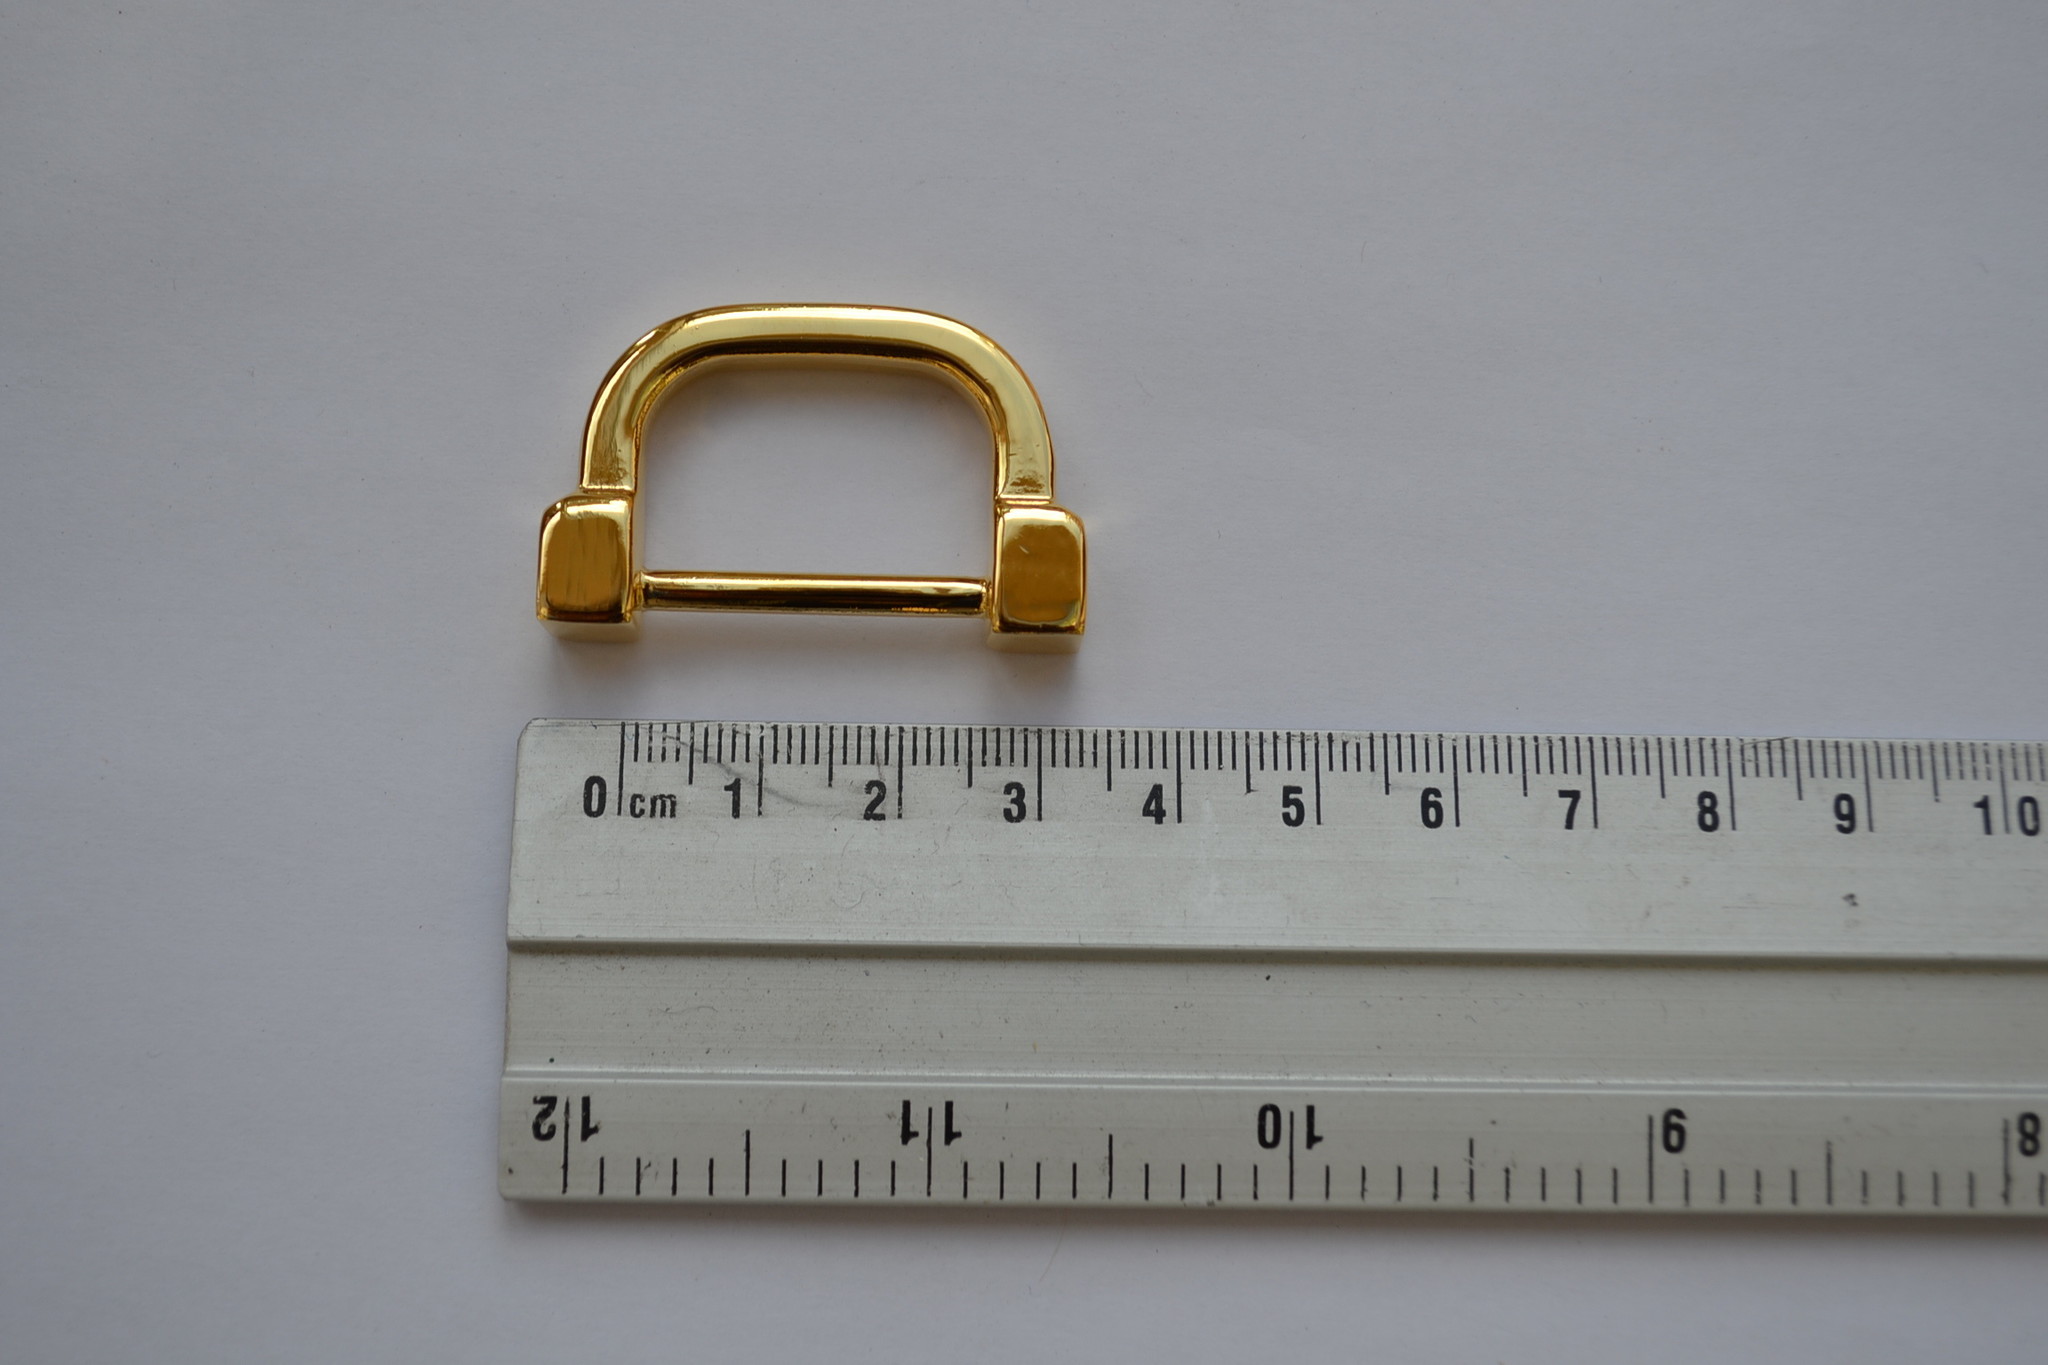 D-ring goud 25mm